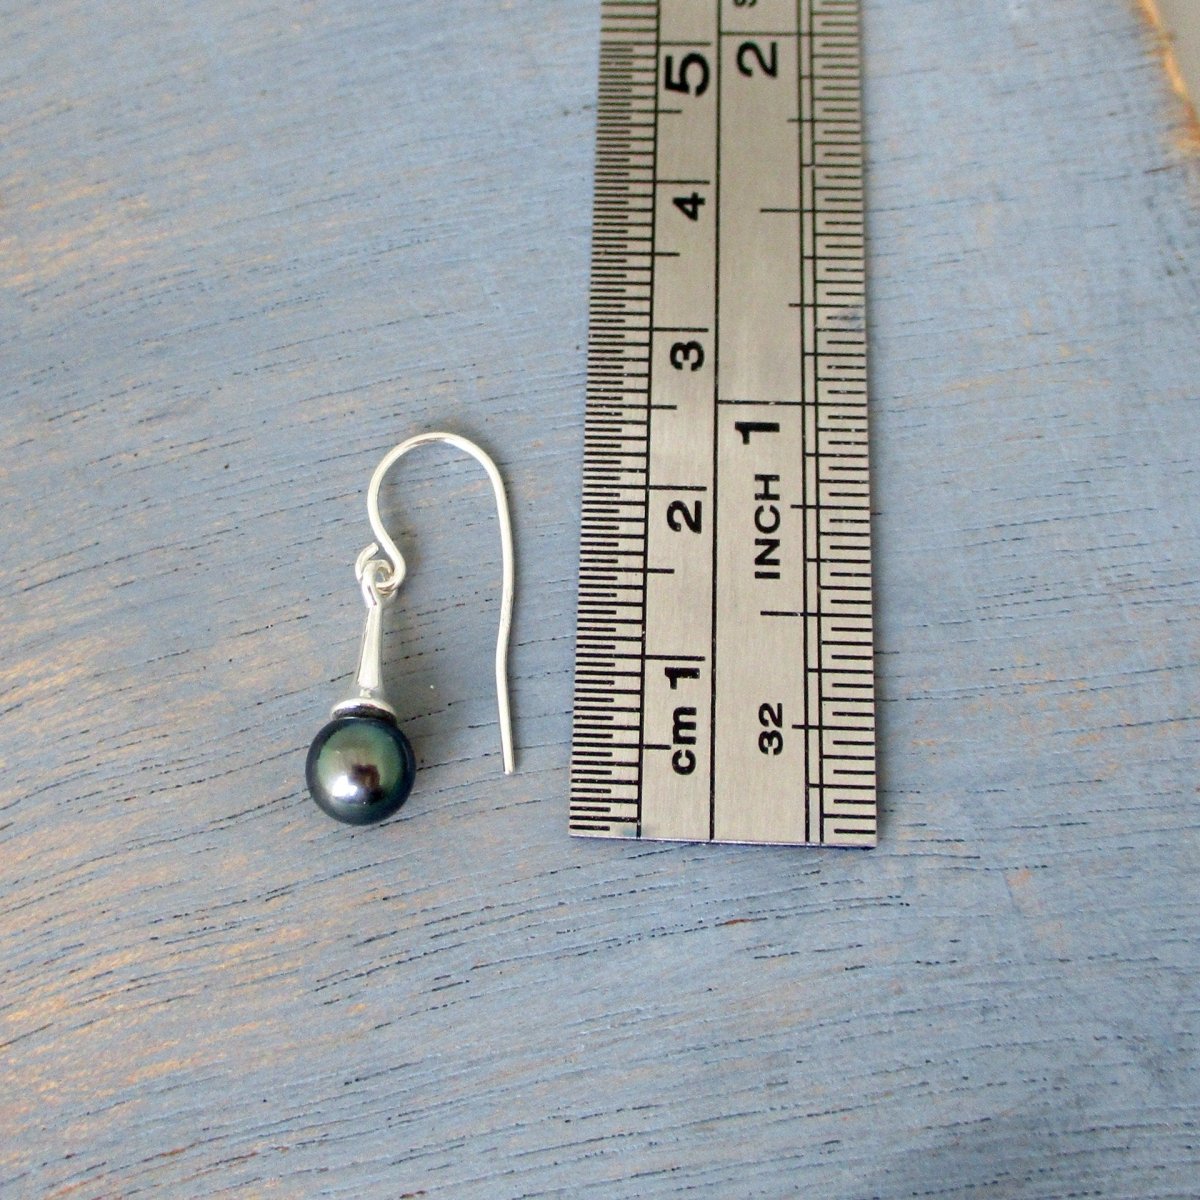 Black Freshwater Pearl Hook Earrings, Sterling Silver - Luxe Design Jewellery